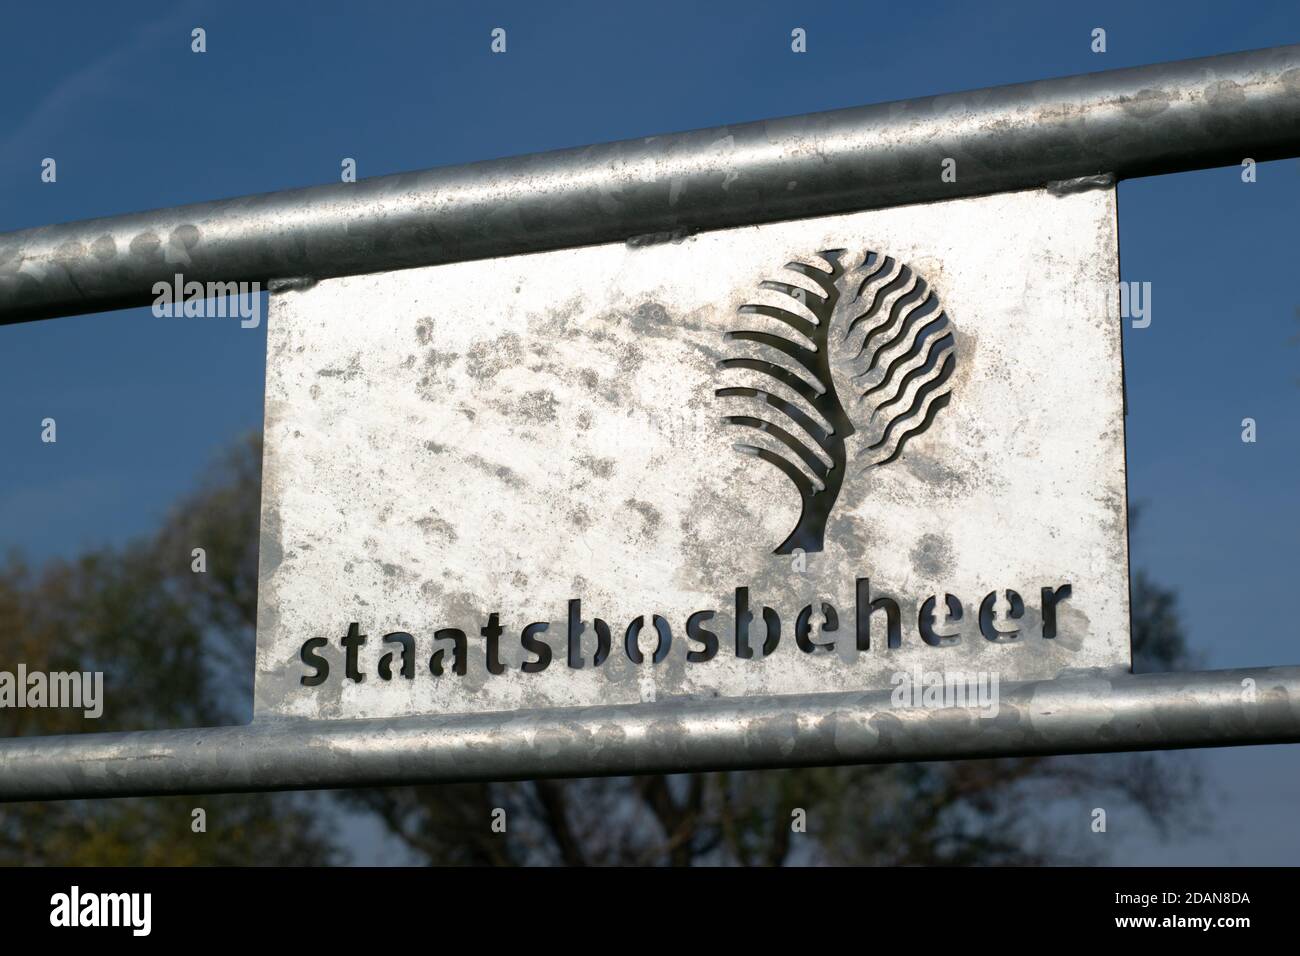 A Metal staatsbosbeheer sign standing in the Nature Stock Photo